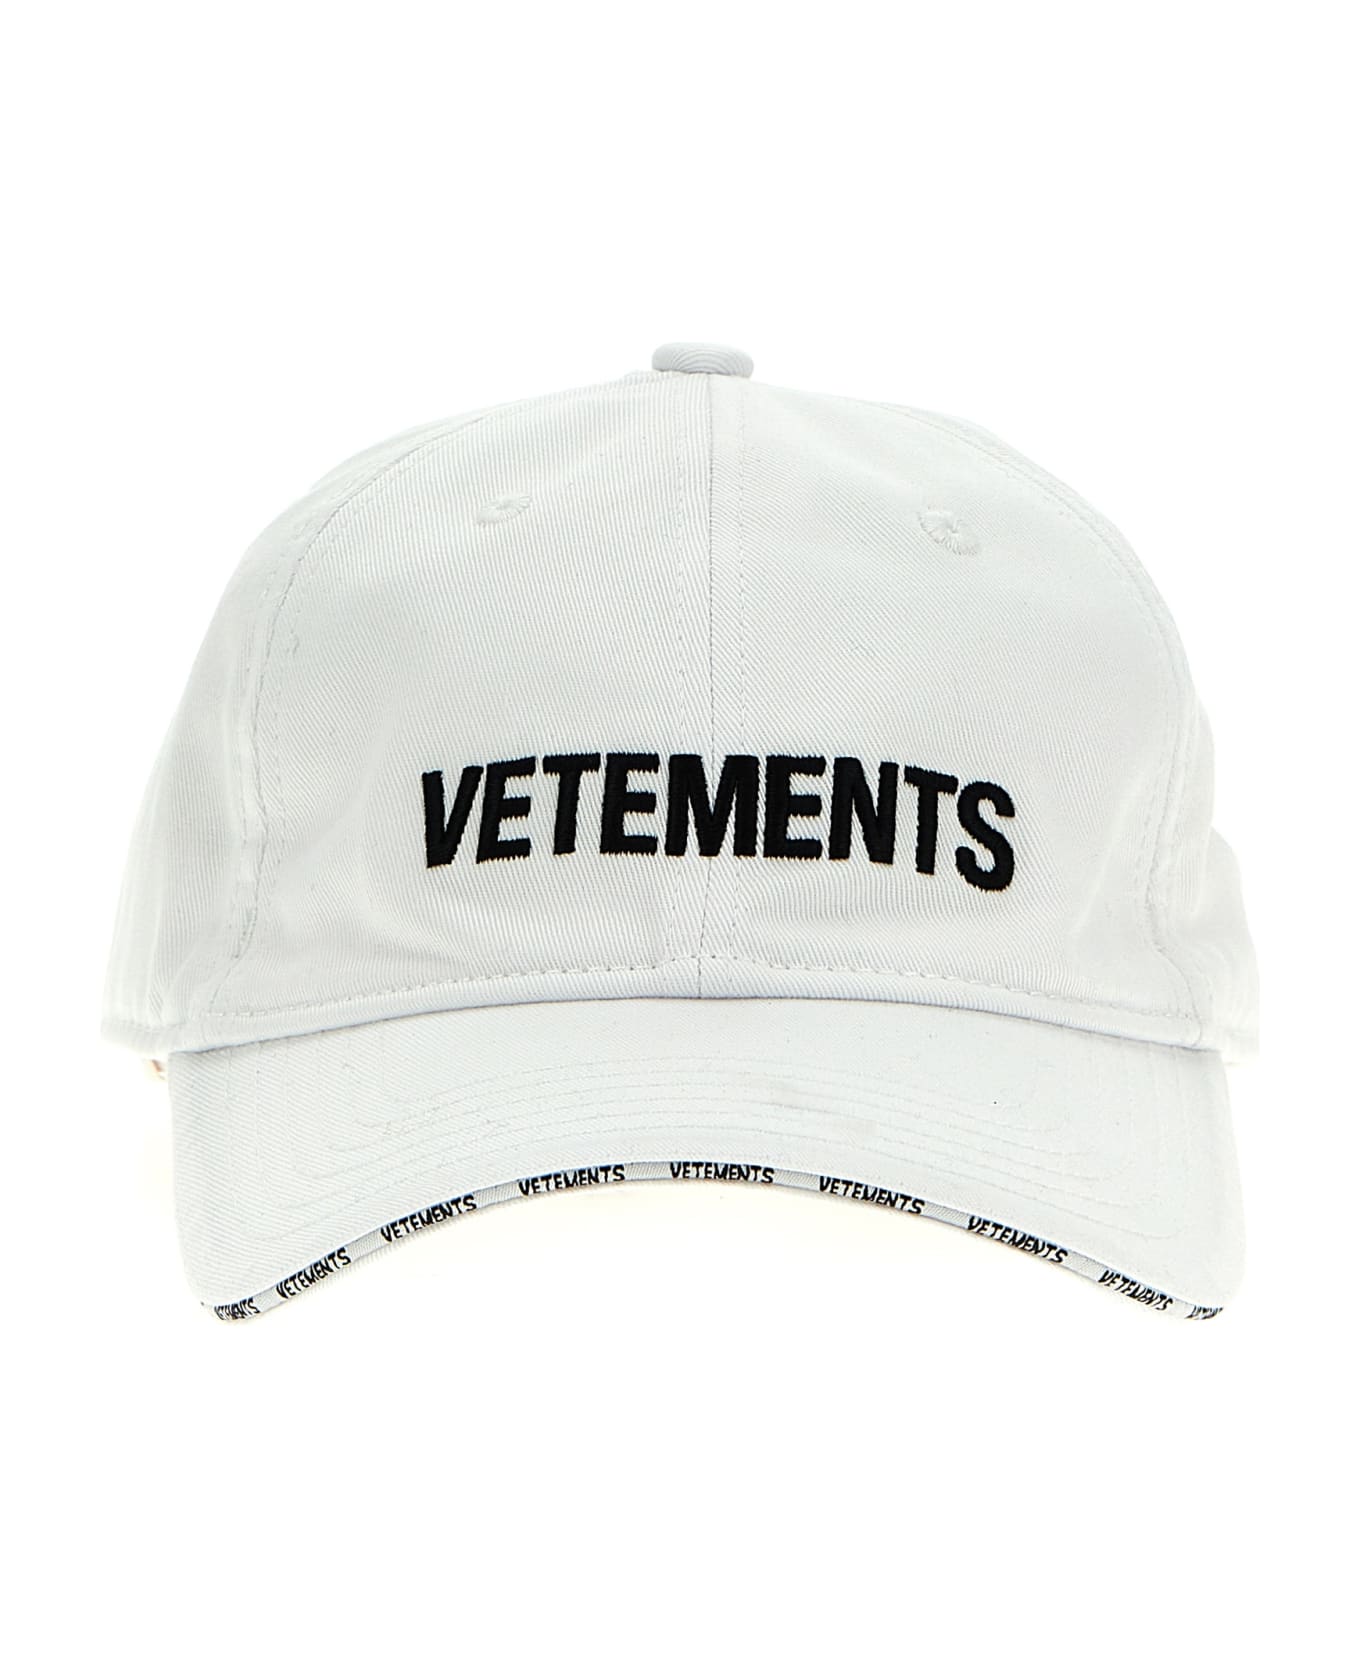 VETEMENTS Logo Cap - White/Black 帽子